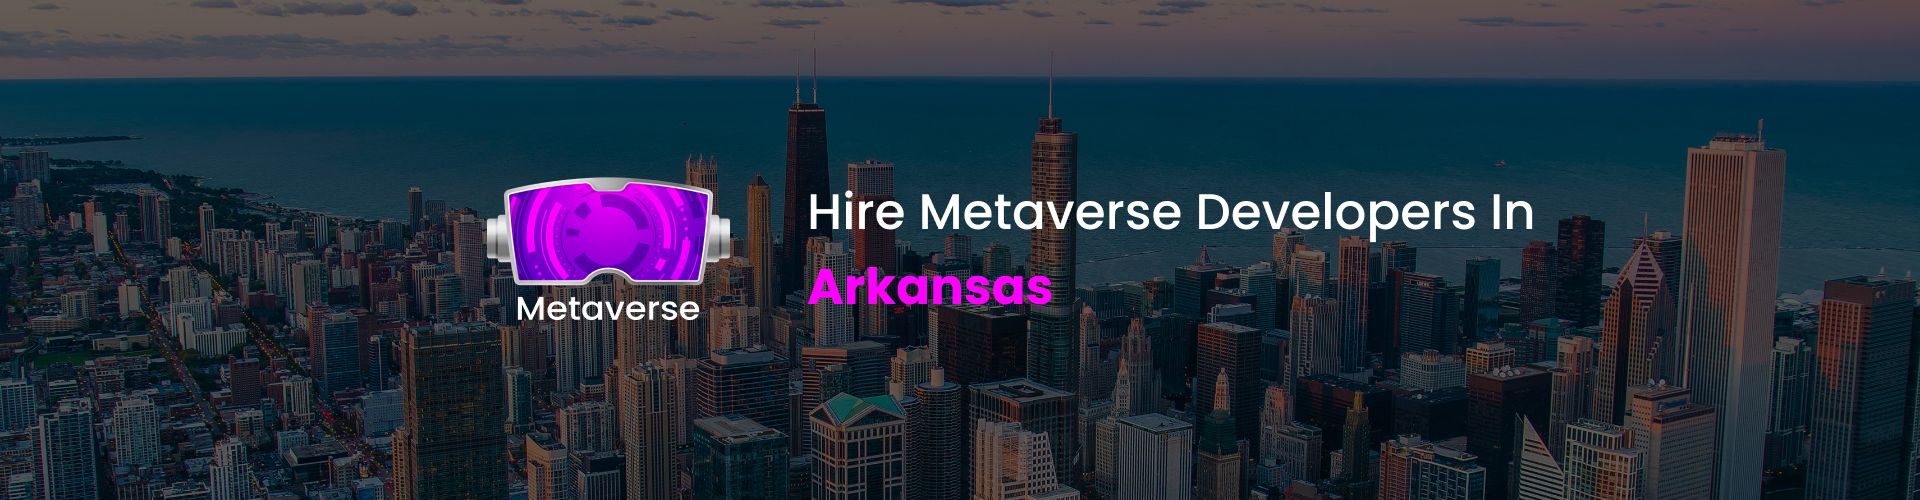 hire metaverse developers in arkansas